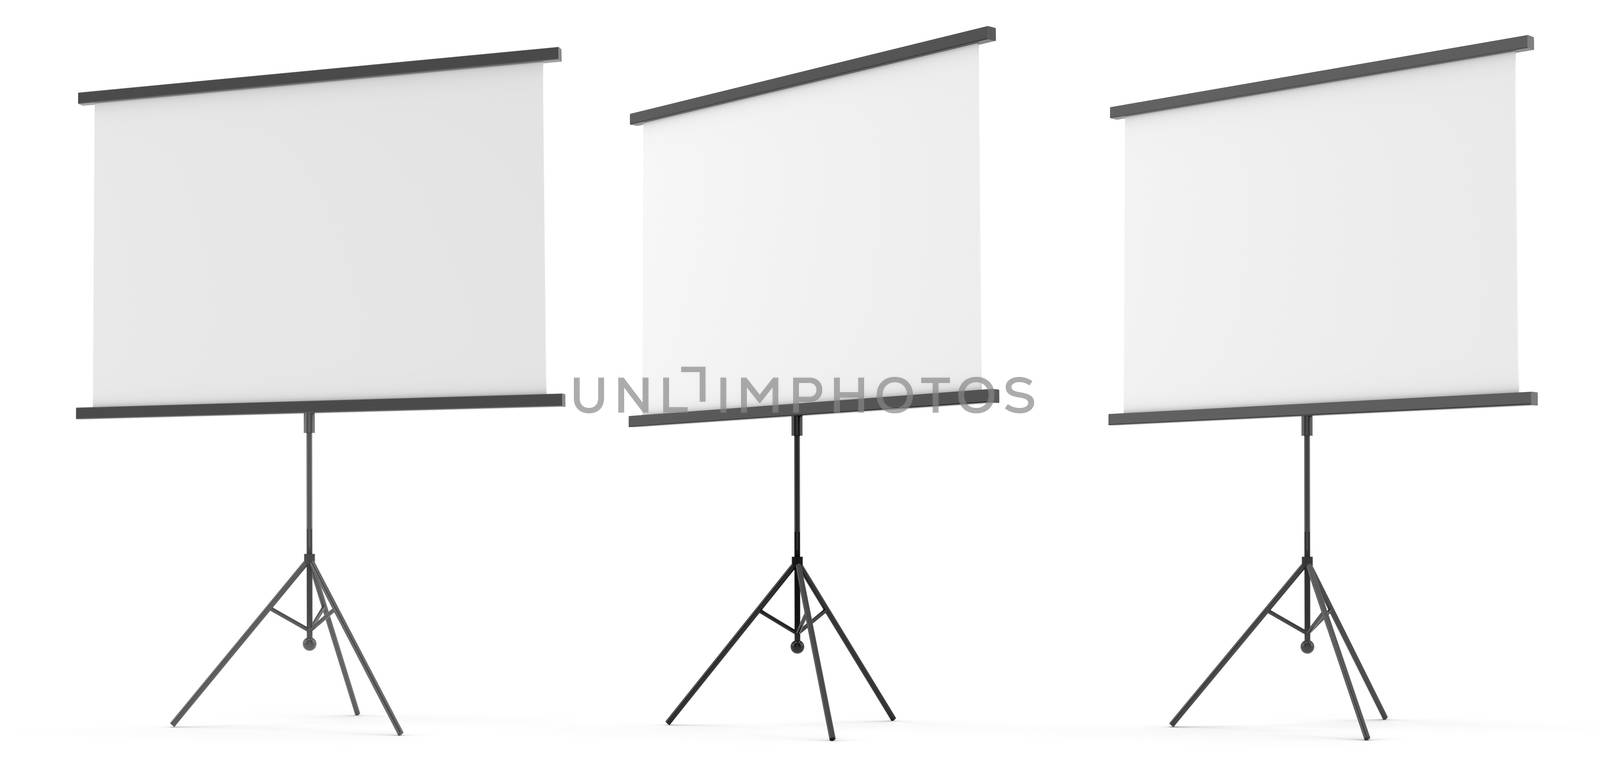 Set of blank presentation screens by cherezoff